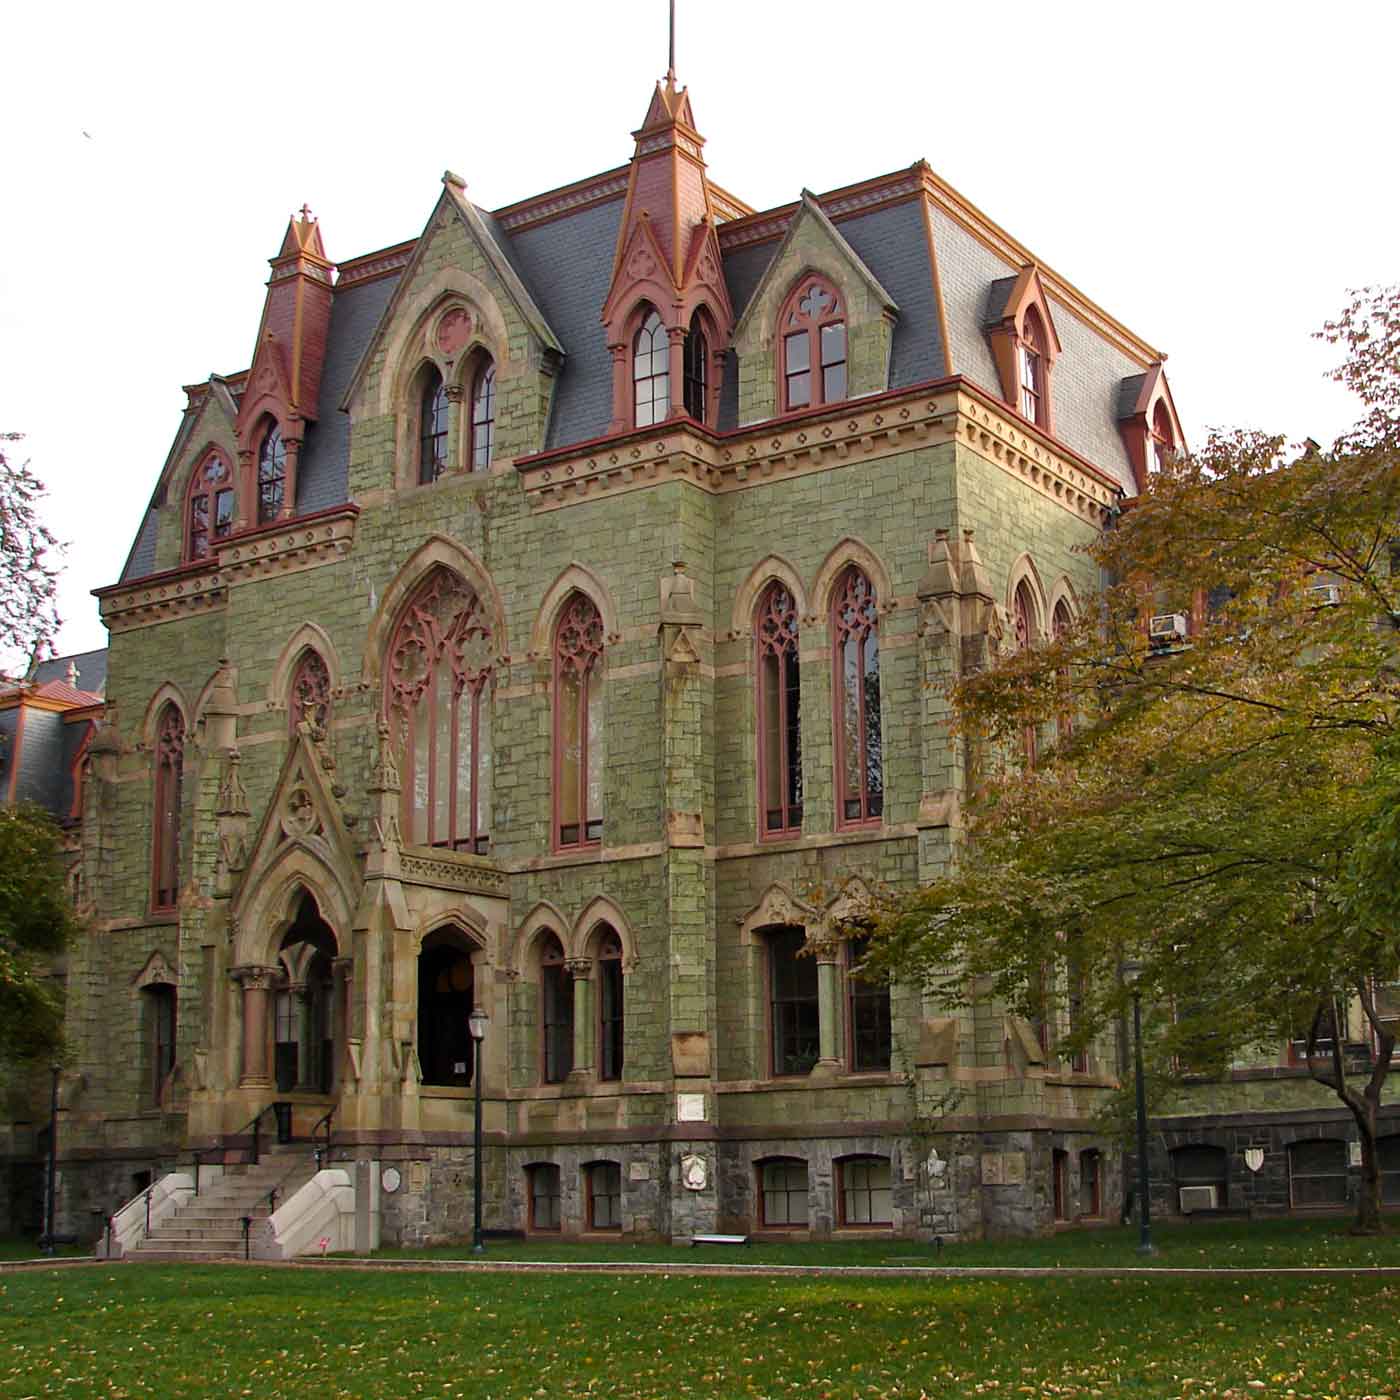 The University of Pennsylvania’s College Hall